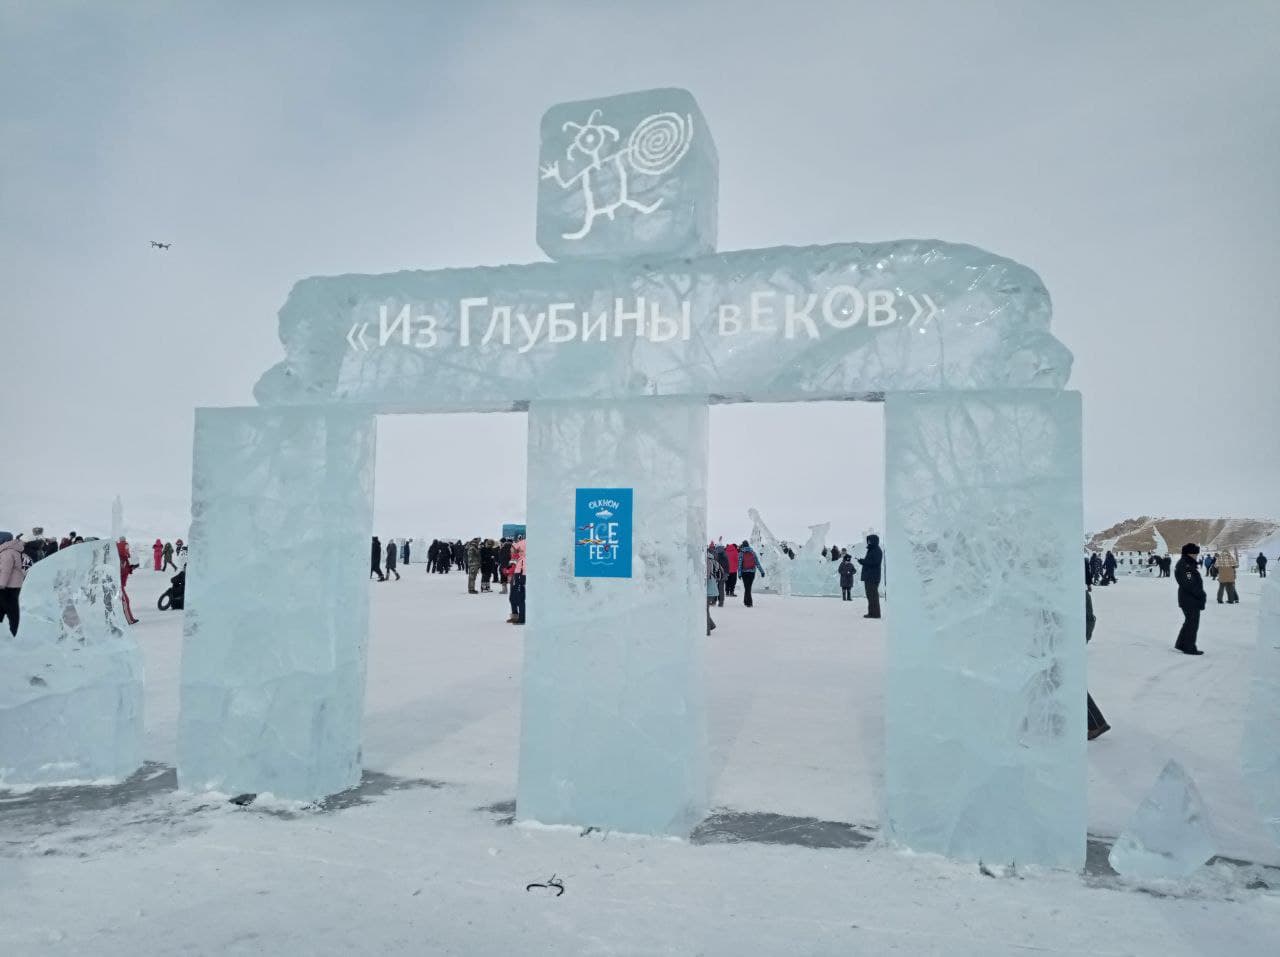 Конкурс ледяных скульптур прошел на Байкале.